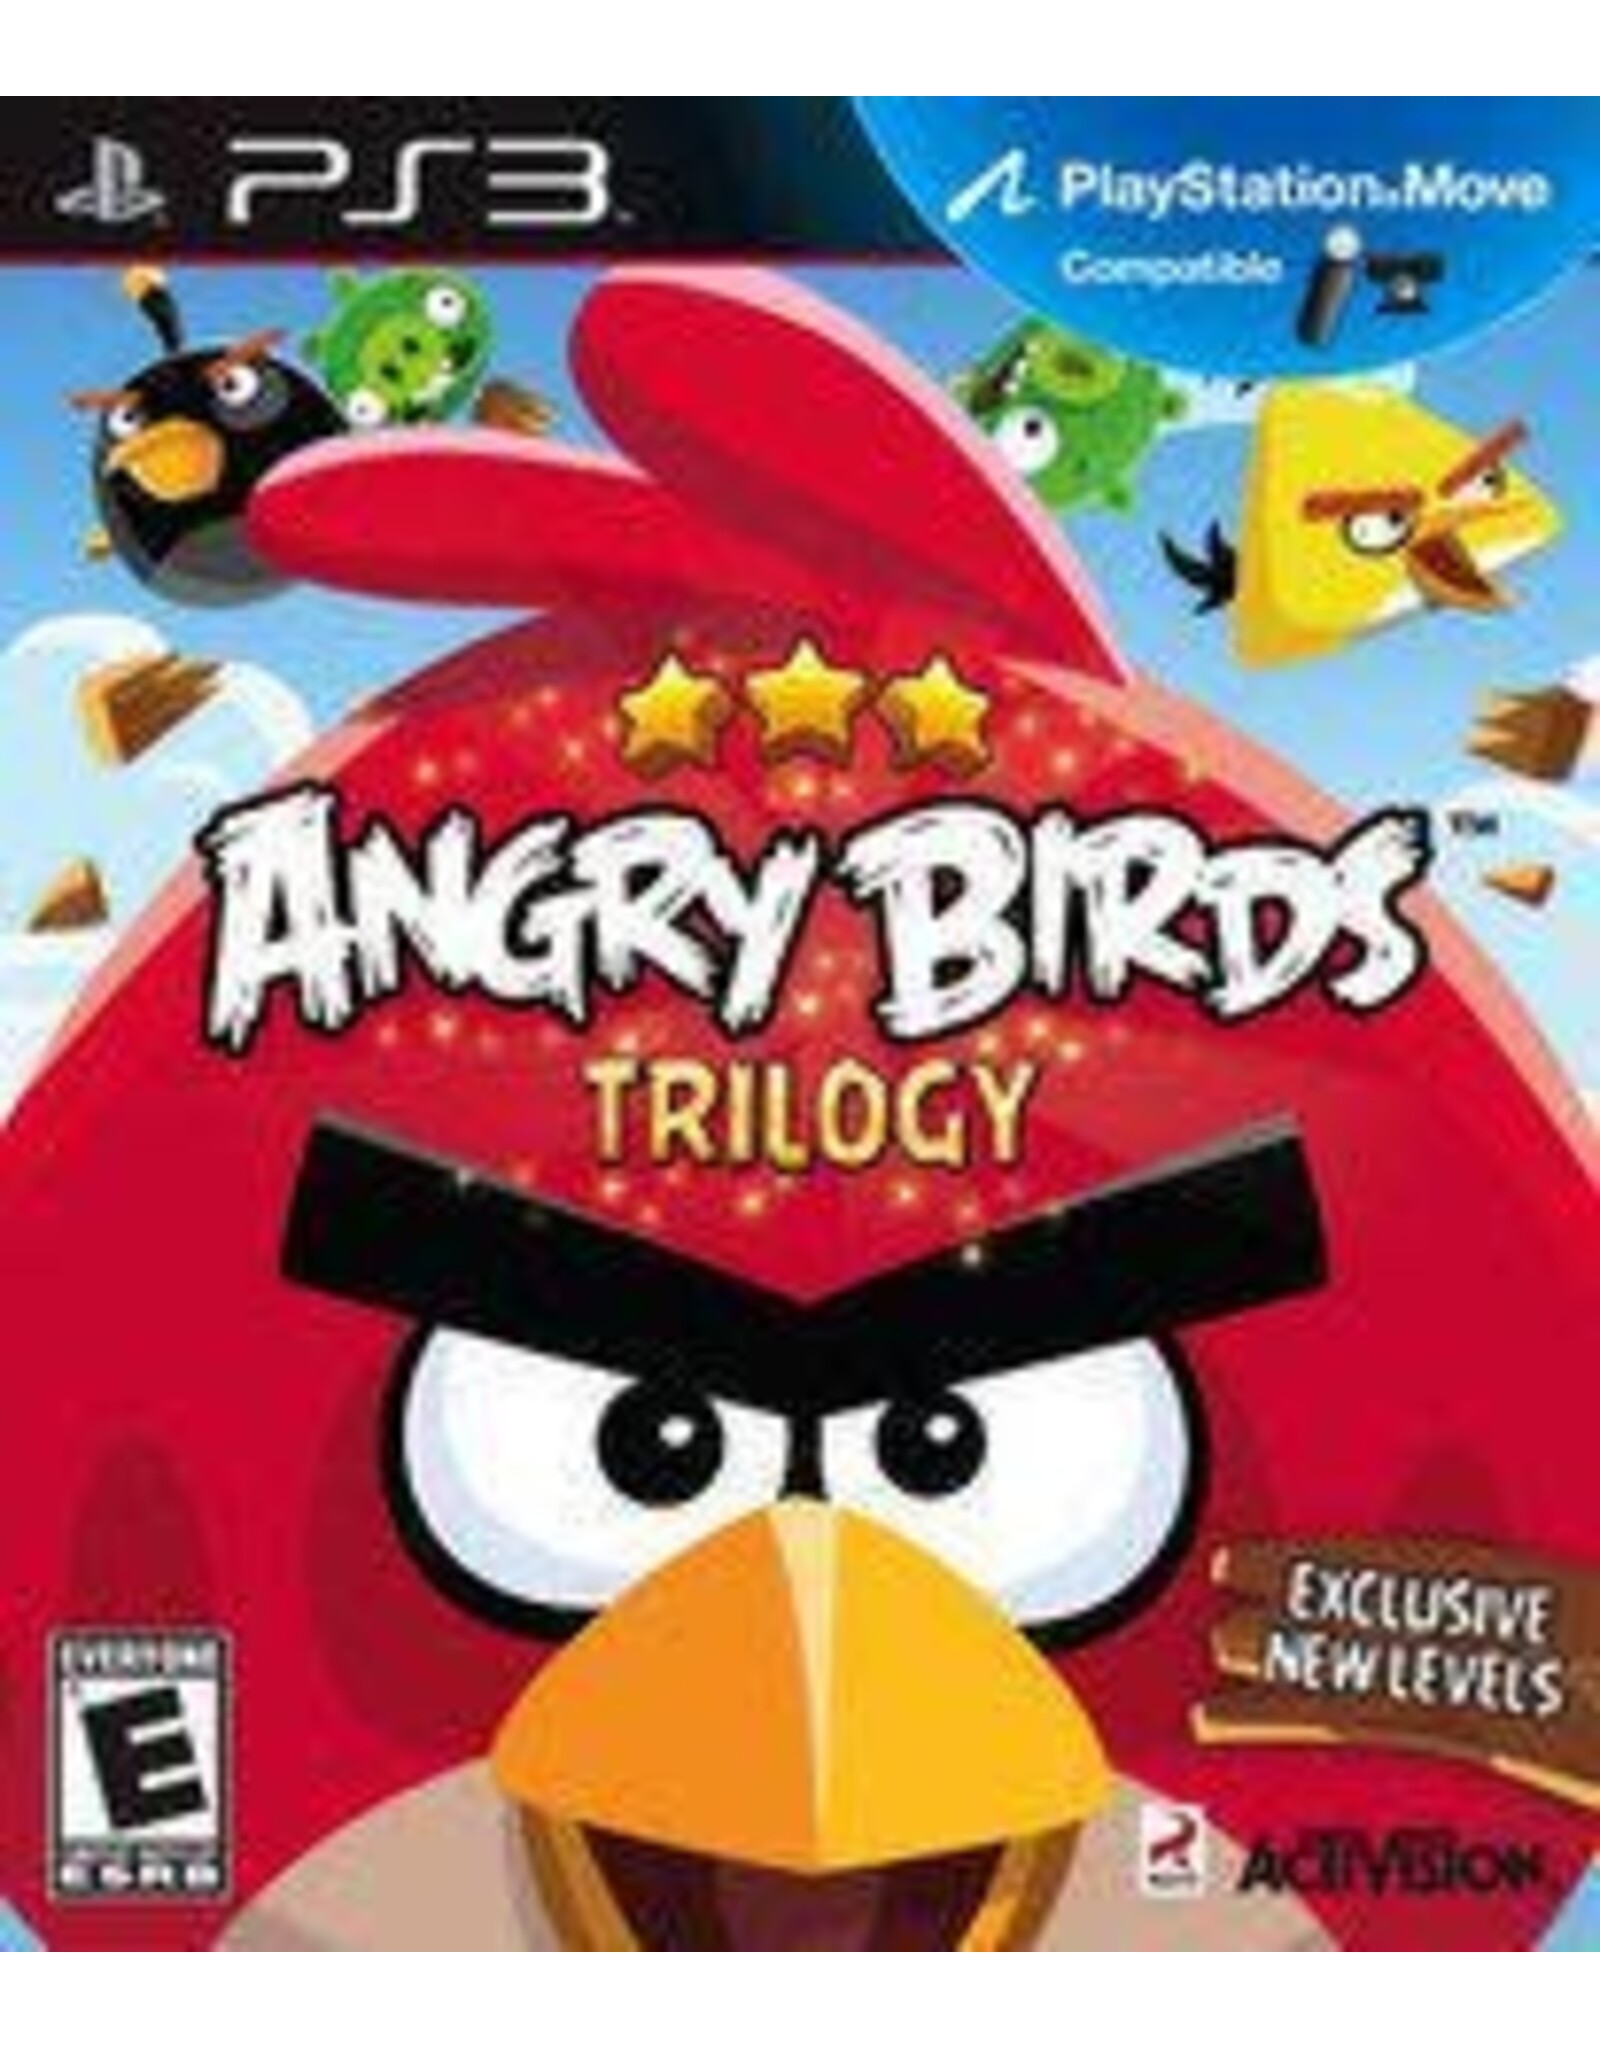 Playstation 3 Angry Birds Trilogy (CiB)